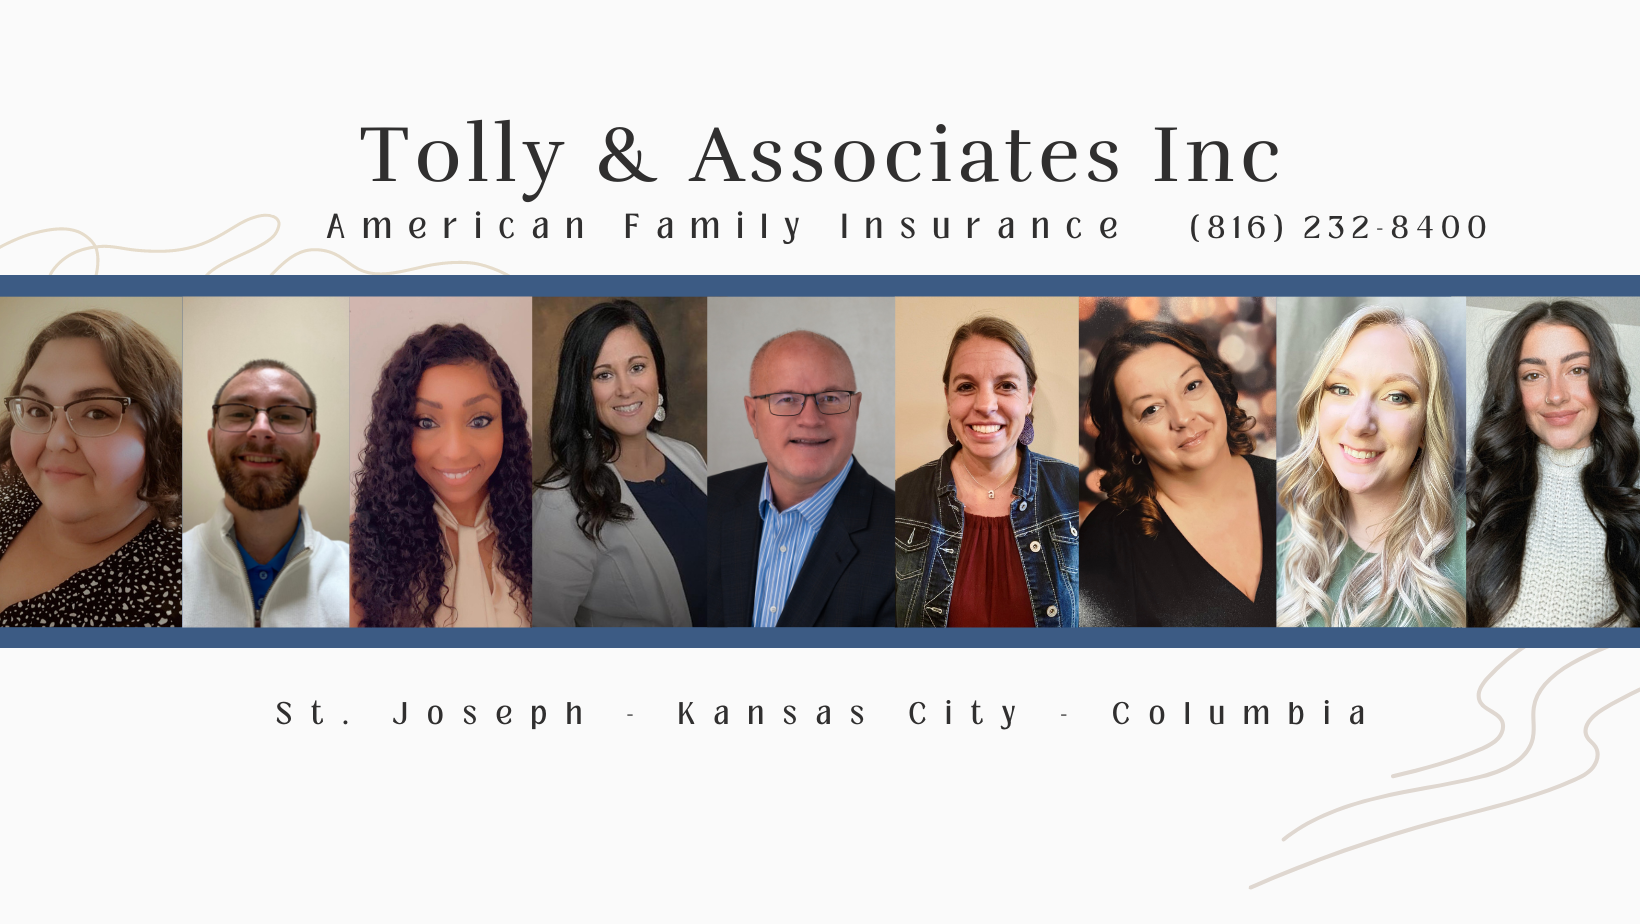 Tolly & Associates Inc.